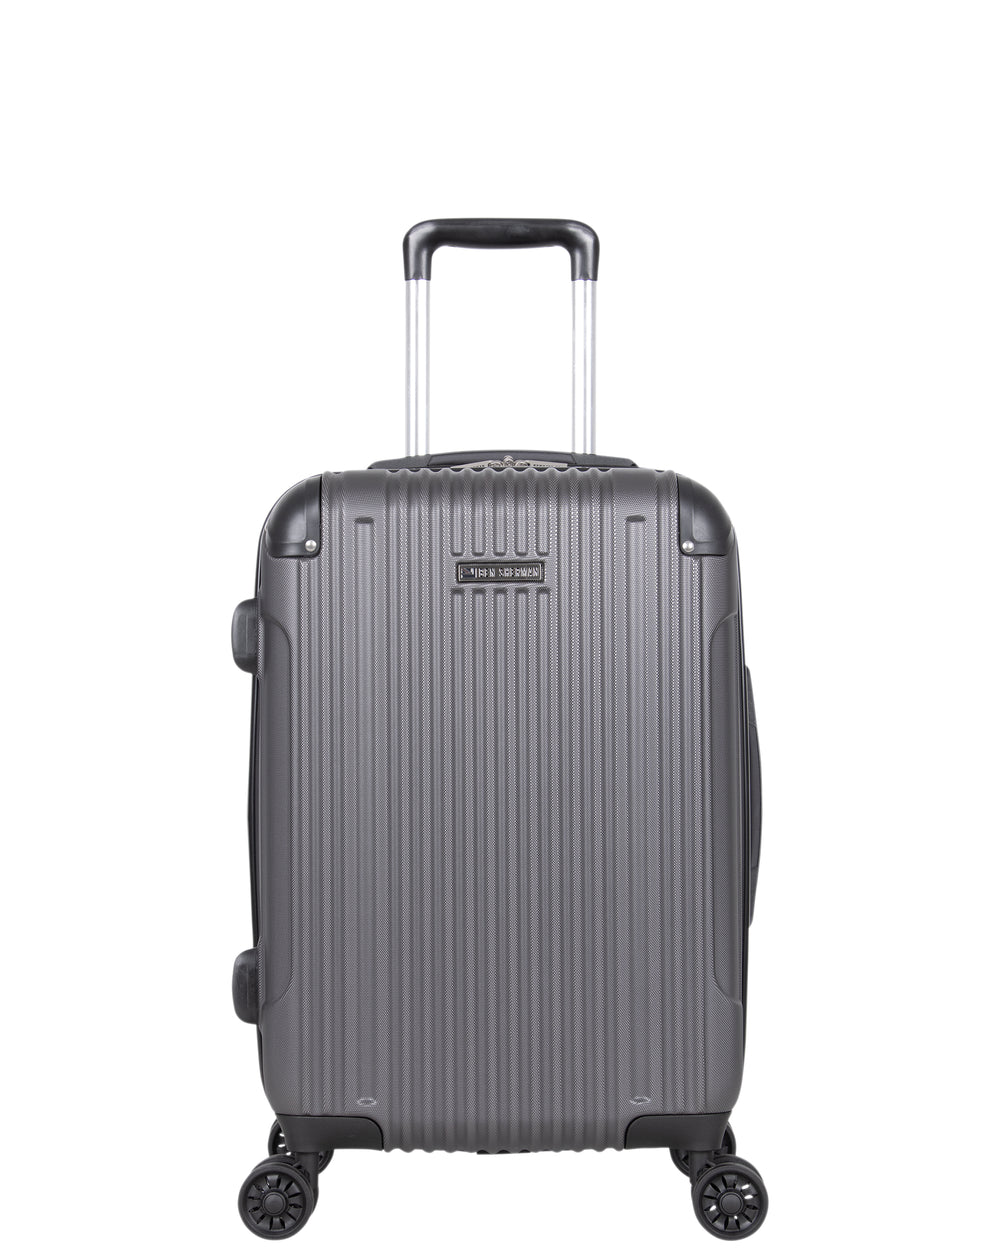 Heathrow Haul 3-Piece Lightweight Expandable Luggage Set - Charcoal